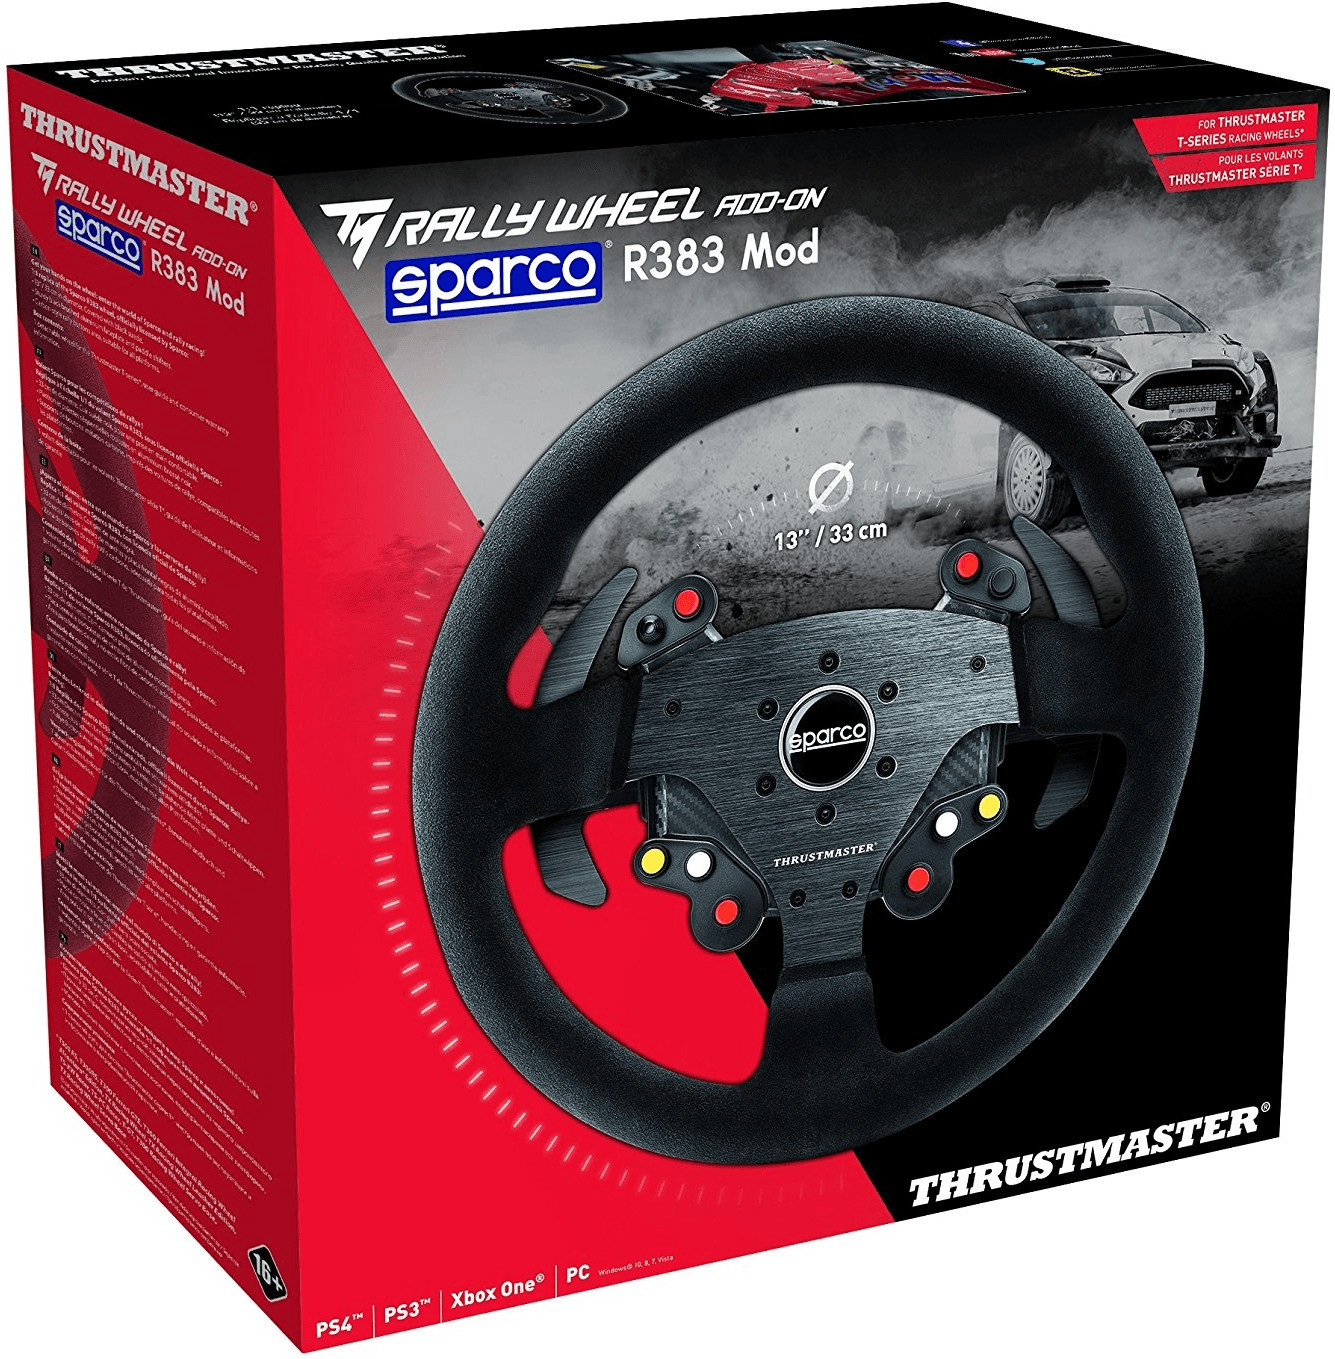 Thrustmaster Rally Wheel Add-On Sparco R383 Mod ab € 231,93